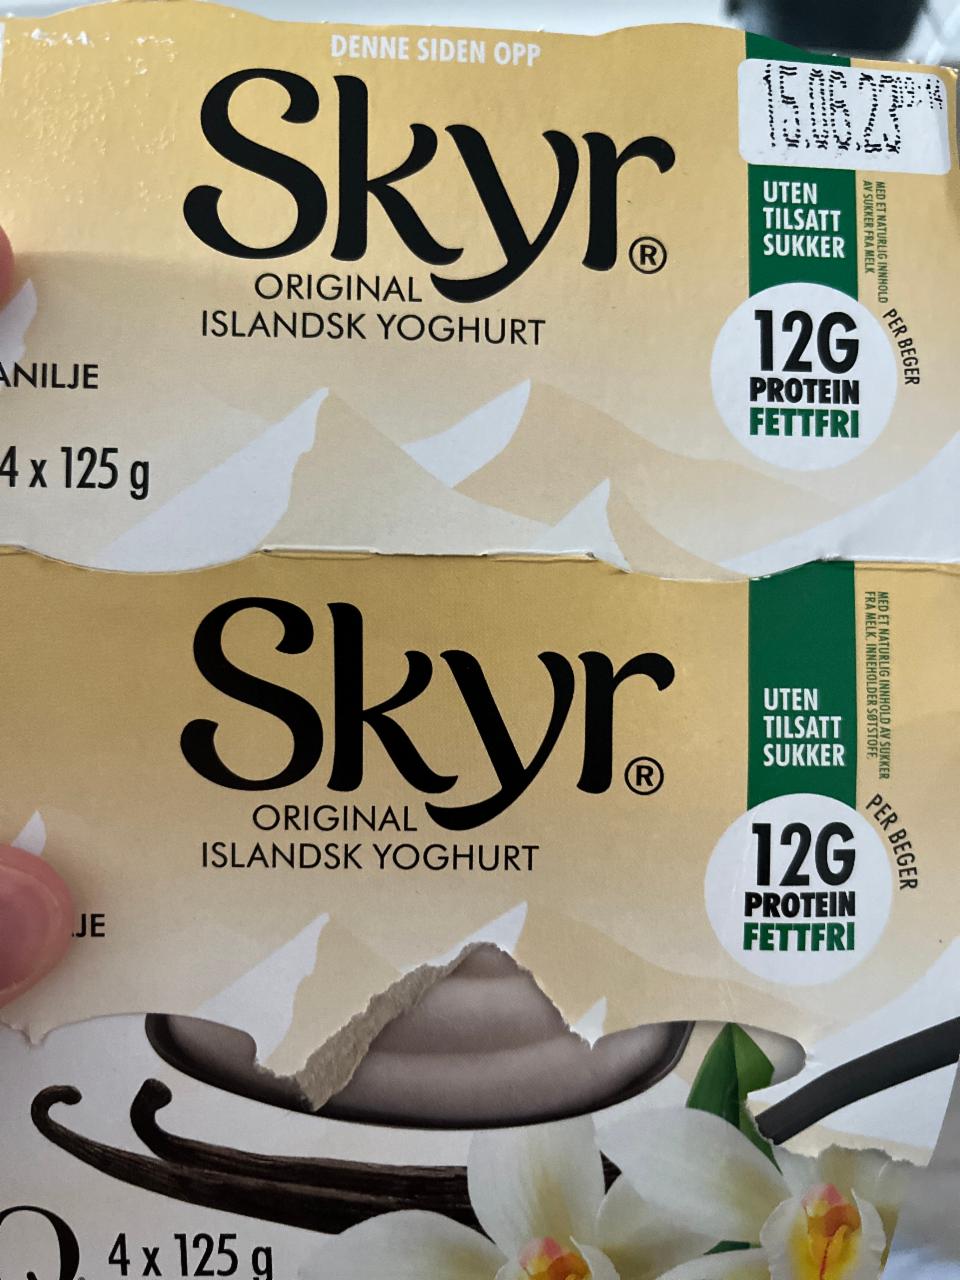 Фото - Original islands yoghurt Skyr